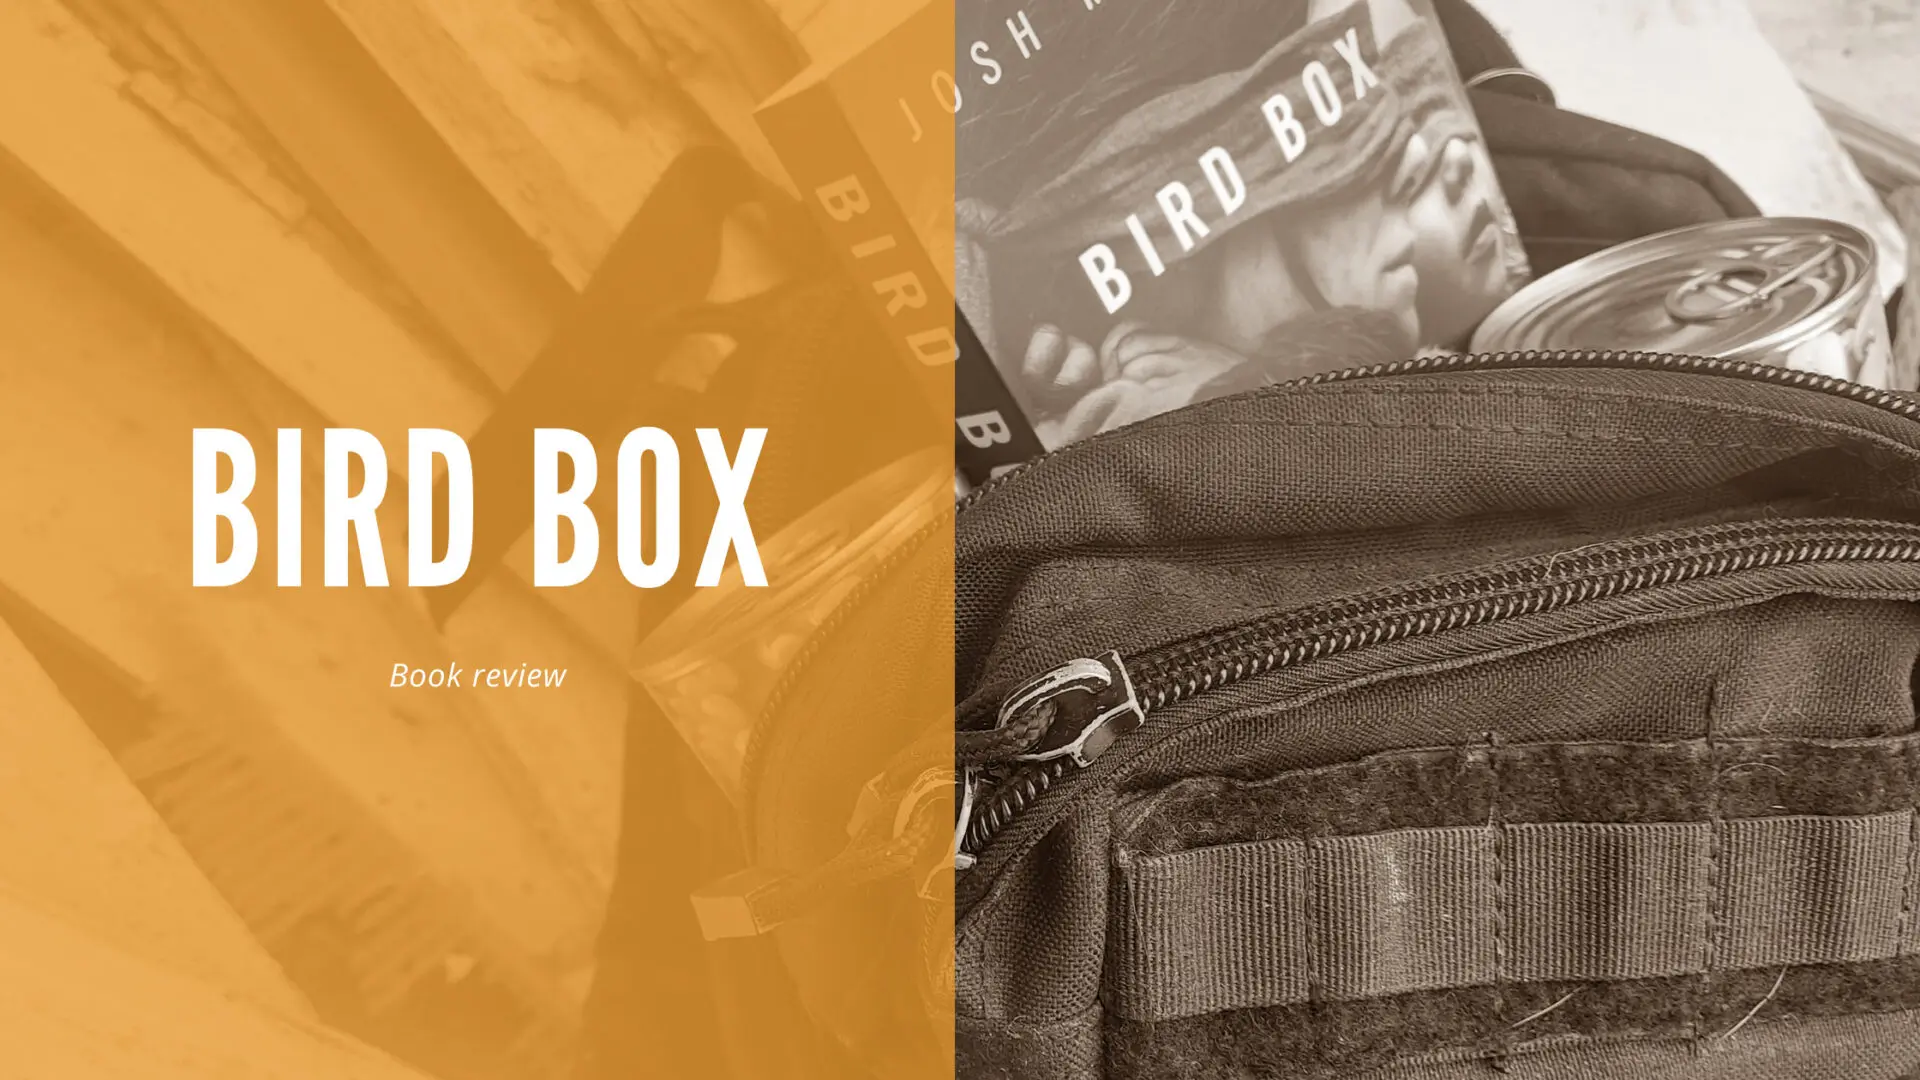 Bird box book review